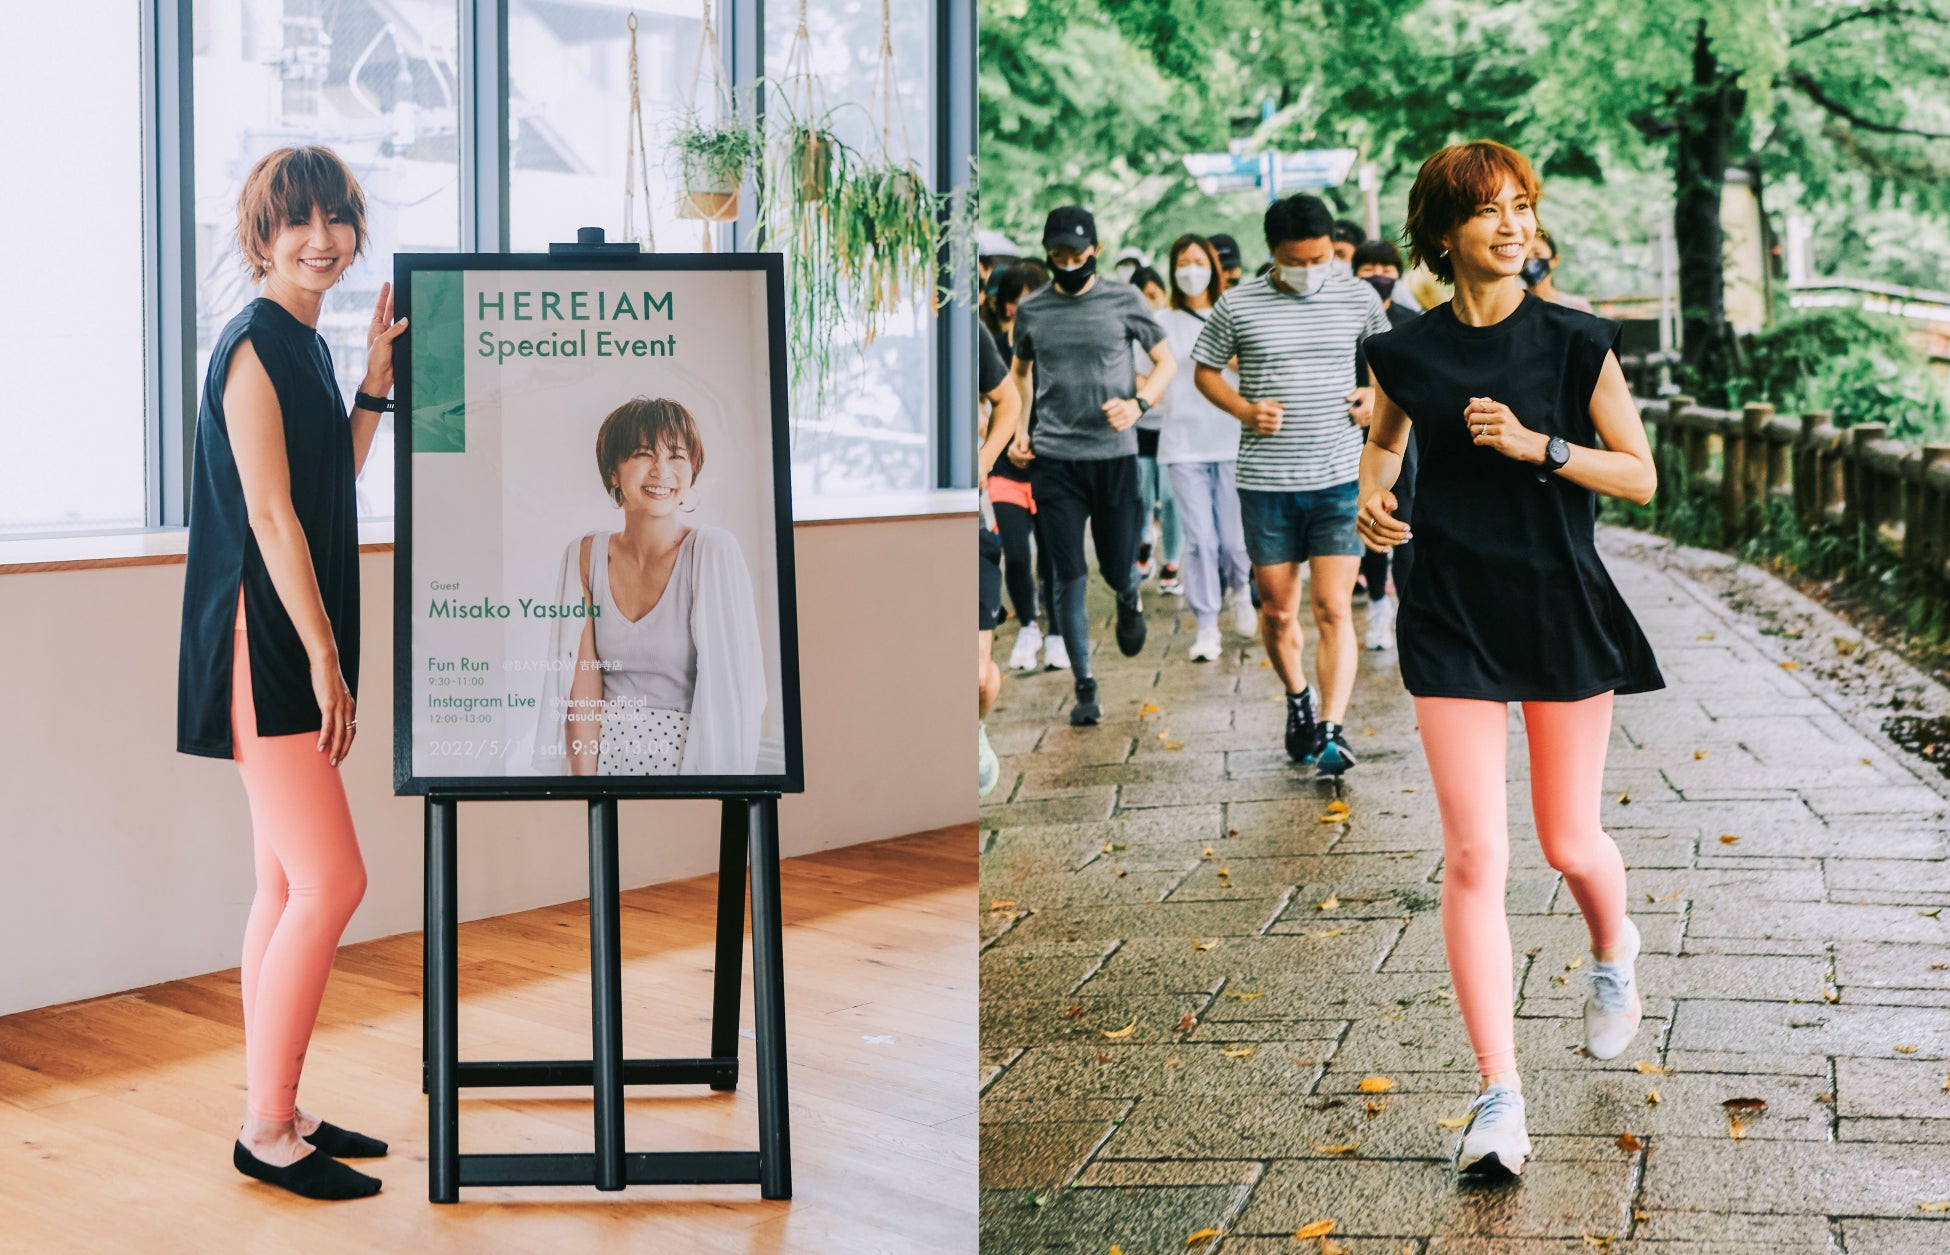 BAYFLOWが手掛けるウェルネスブランド「HEREIAM」がランニングアドバイザー兼タレントの安田美沙子さんをゲストに『ランニングでポジティブになれる極意』をテーマにランイベントを開催